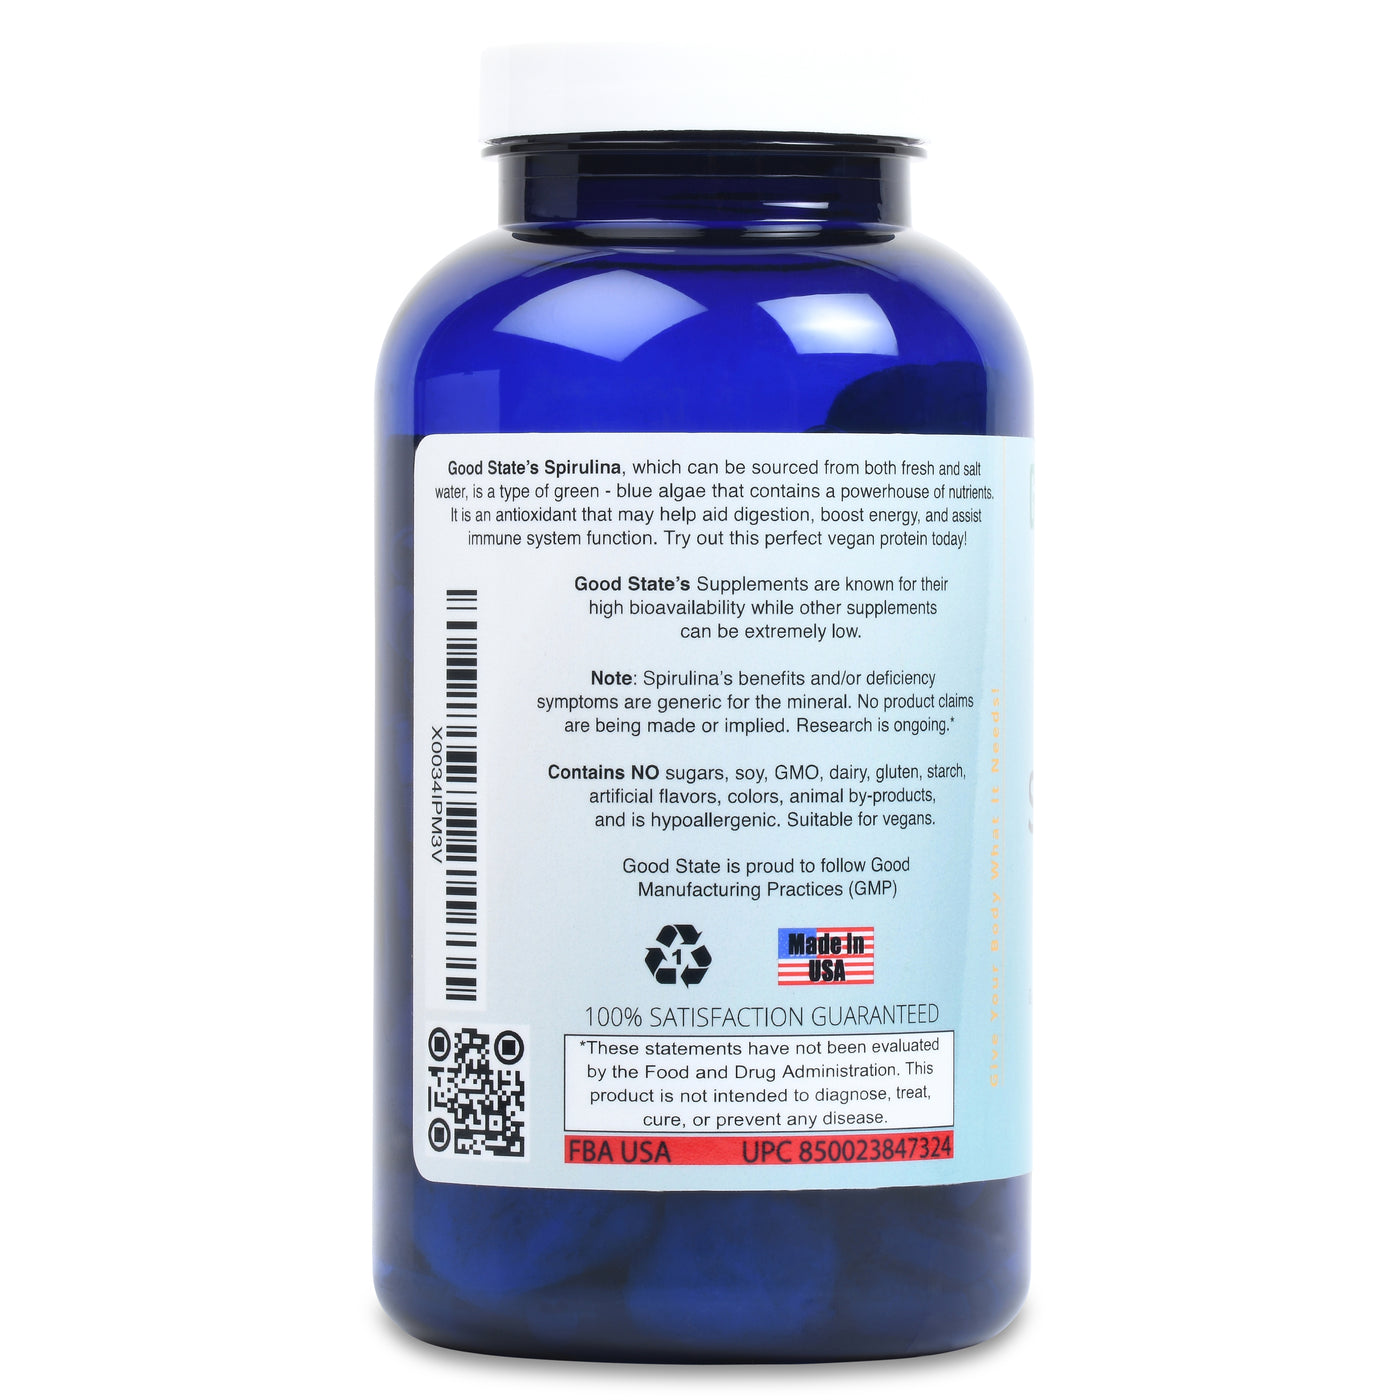 Raw Spirulina Capsules | 240 Count | 3000 mg per serving